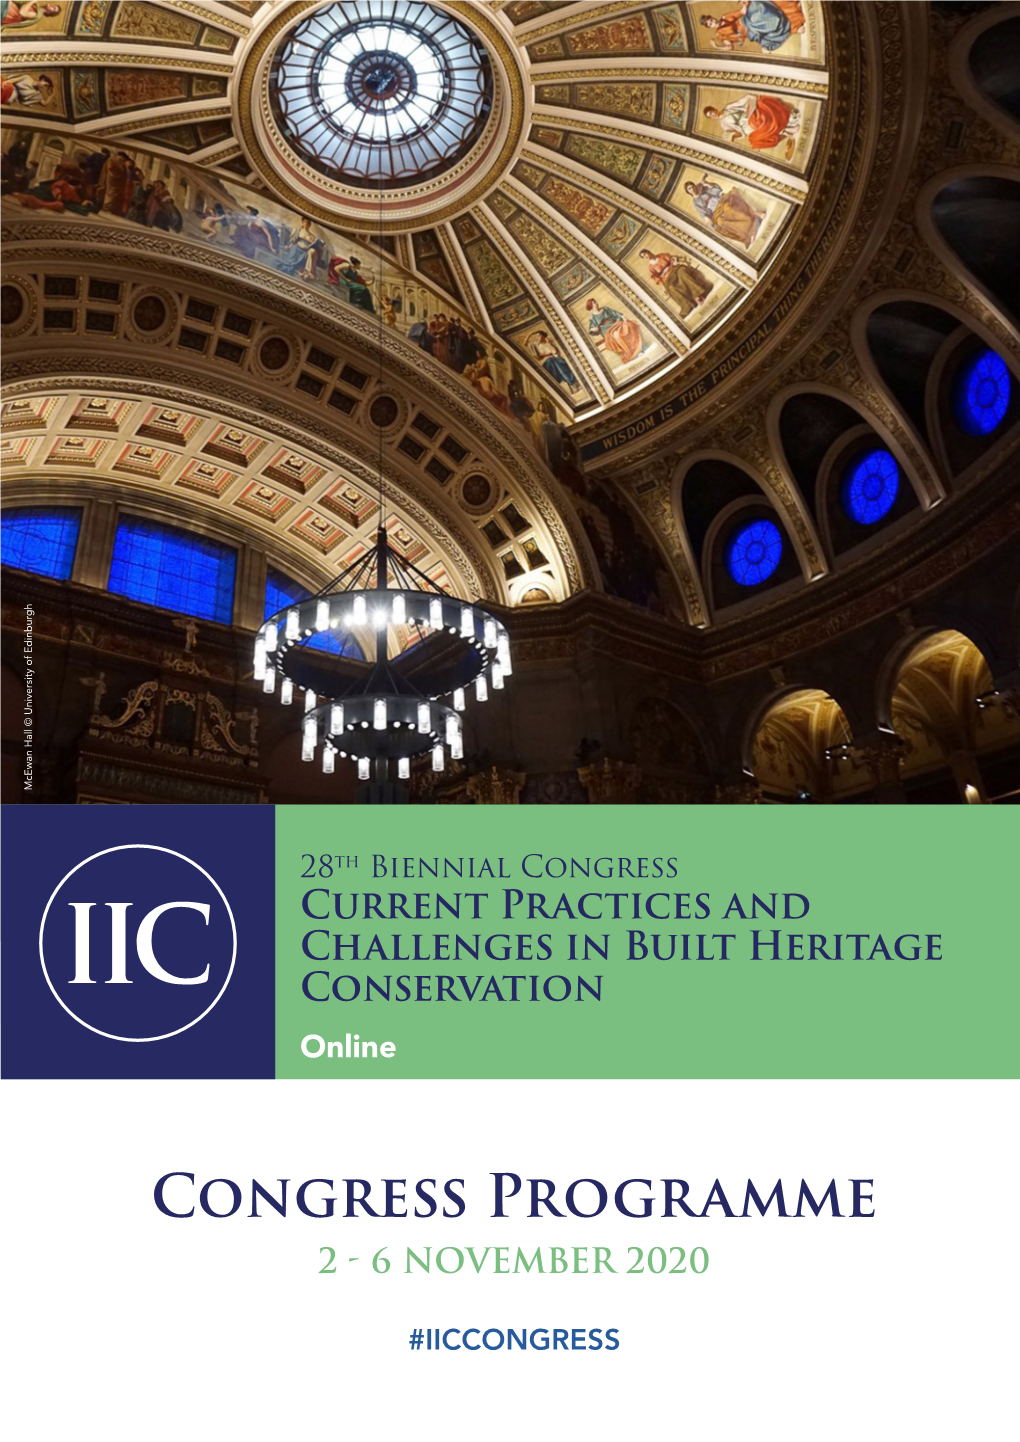 Congress Programme Congress Online Conservation Challenges Inbuilt Heritage and Practices Current 28 2 -6NOVEMBER 2020 Th Biennial Congress #IICCONGRESS